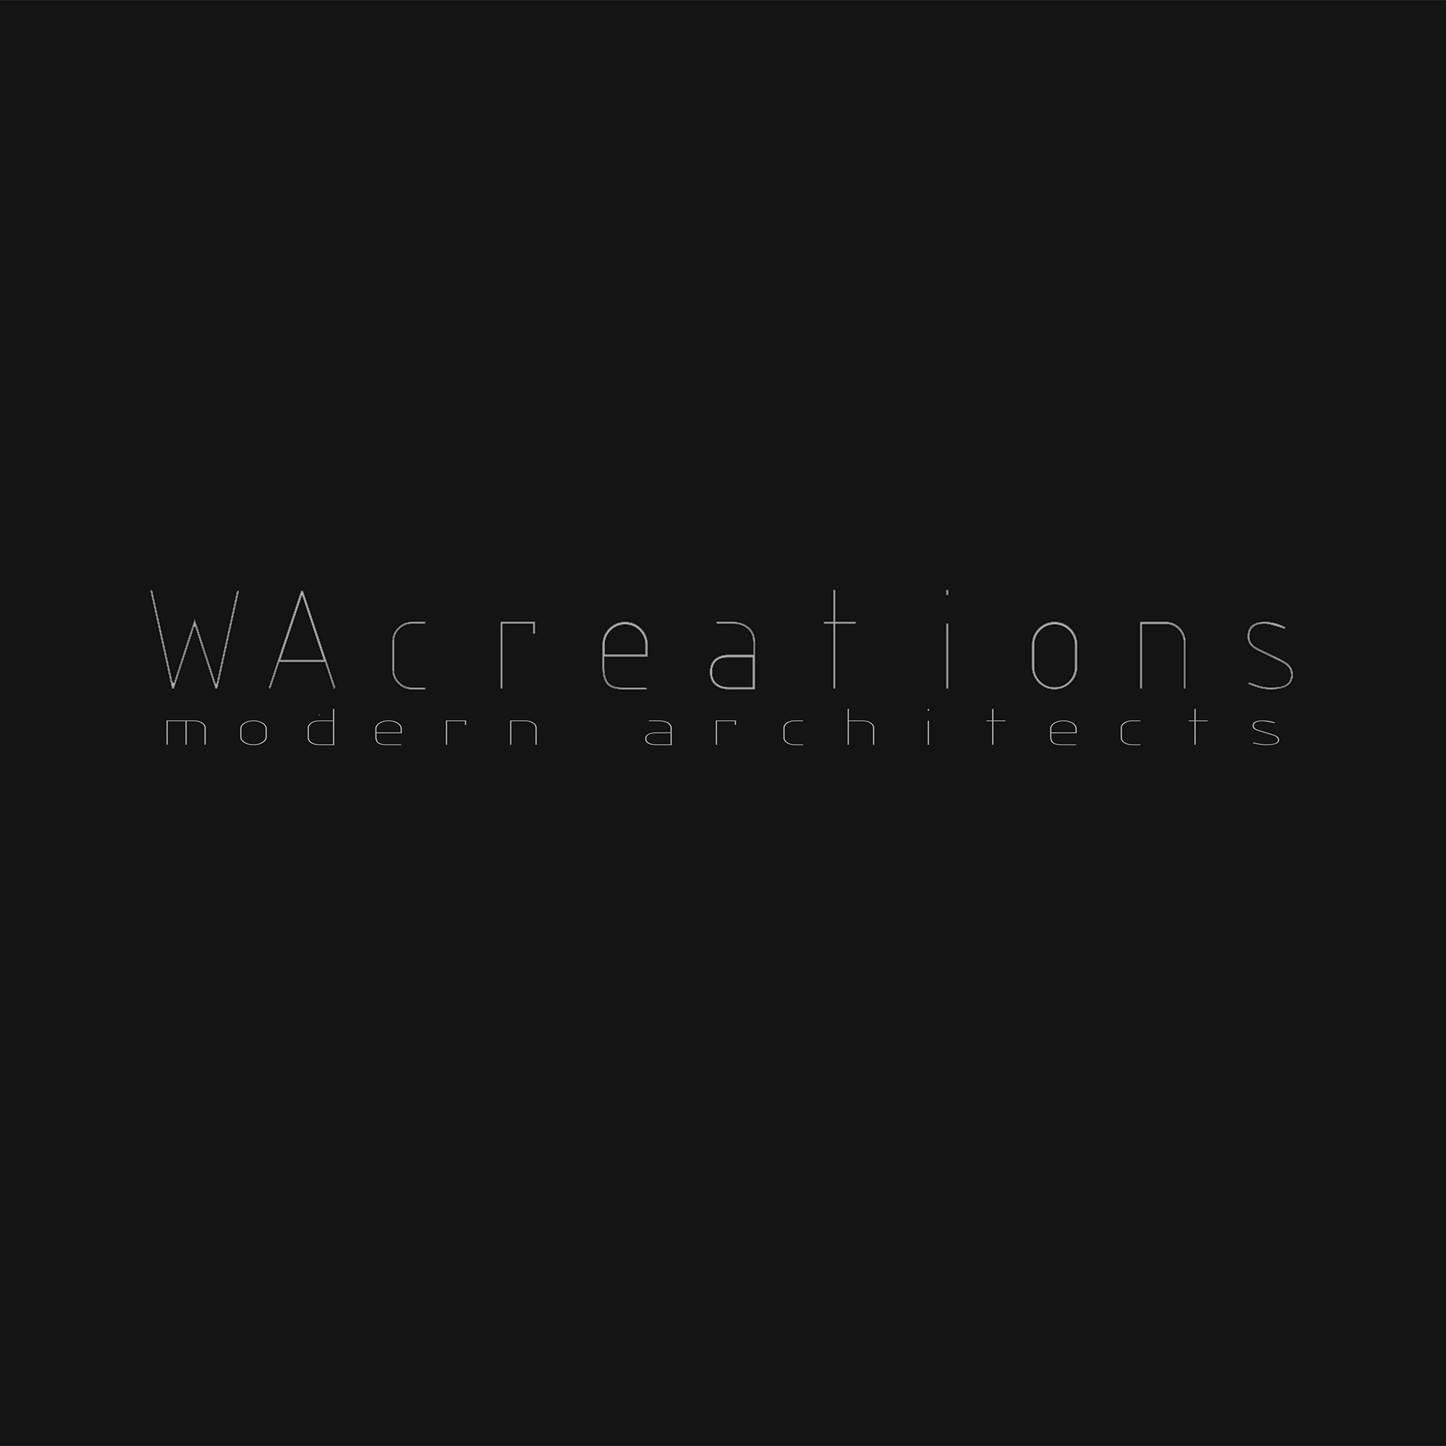 WAcreations|Legal Services|Professional Services